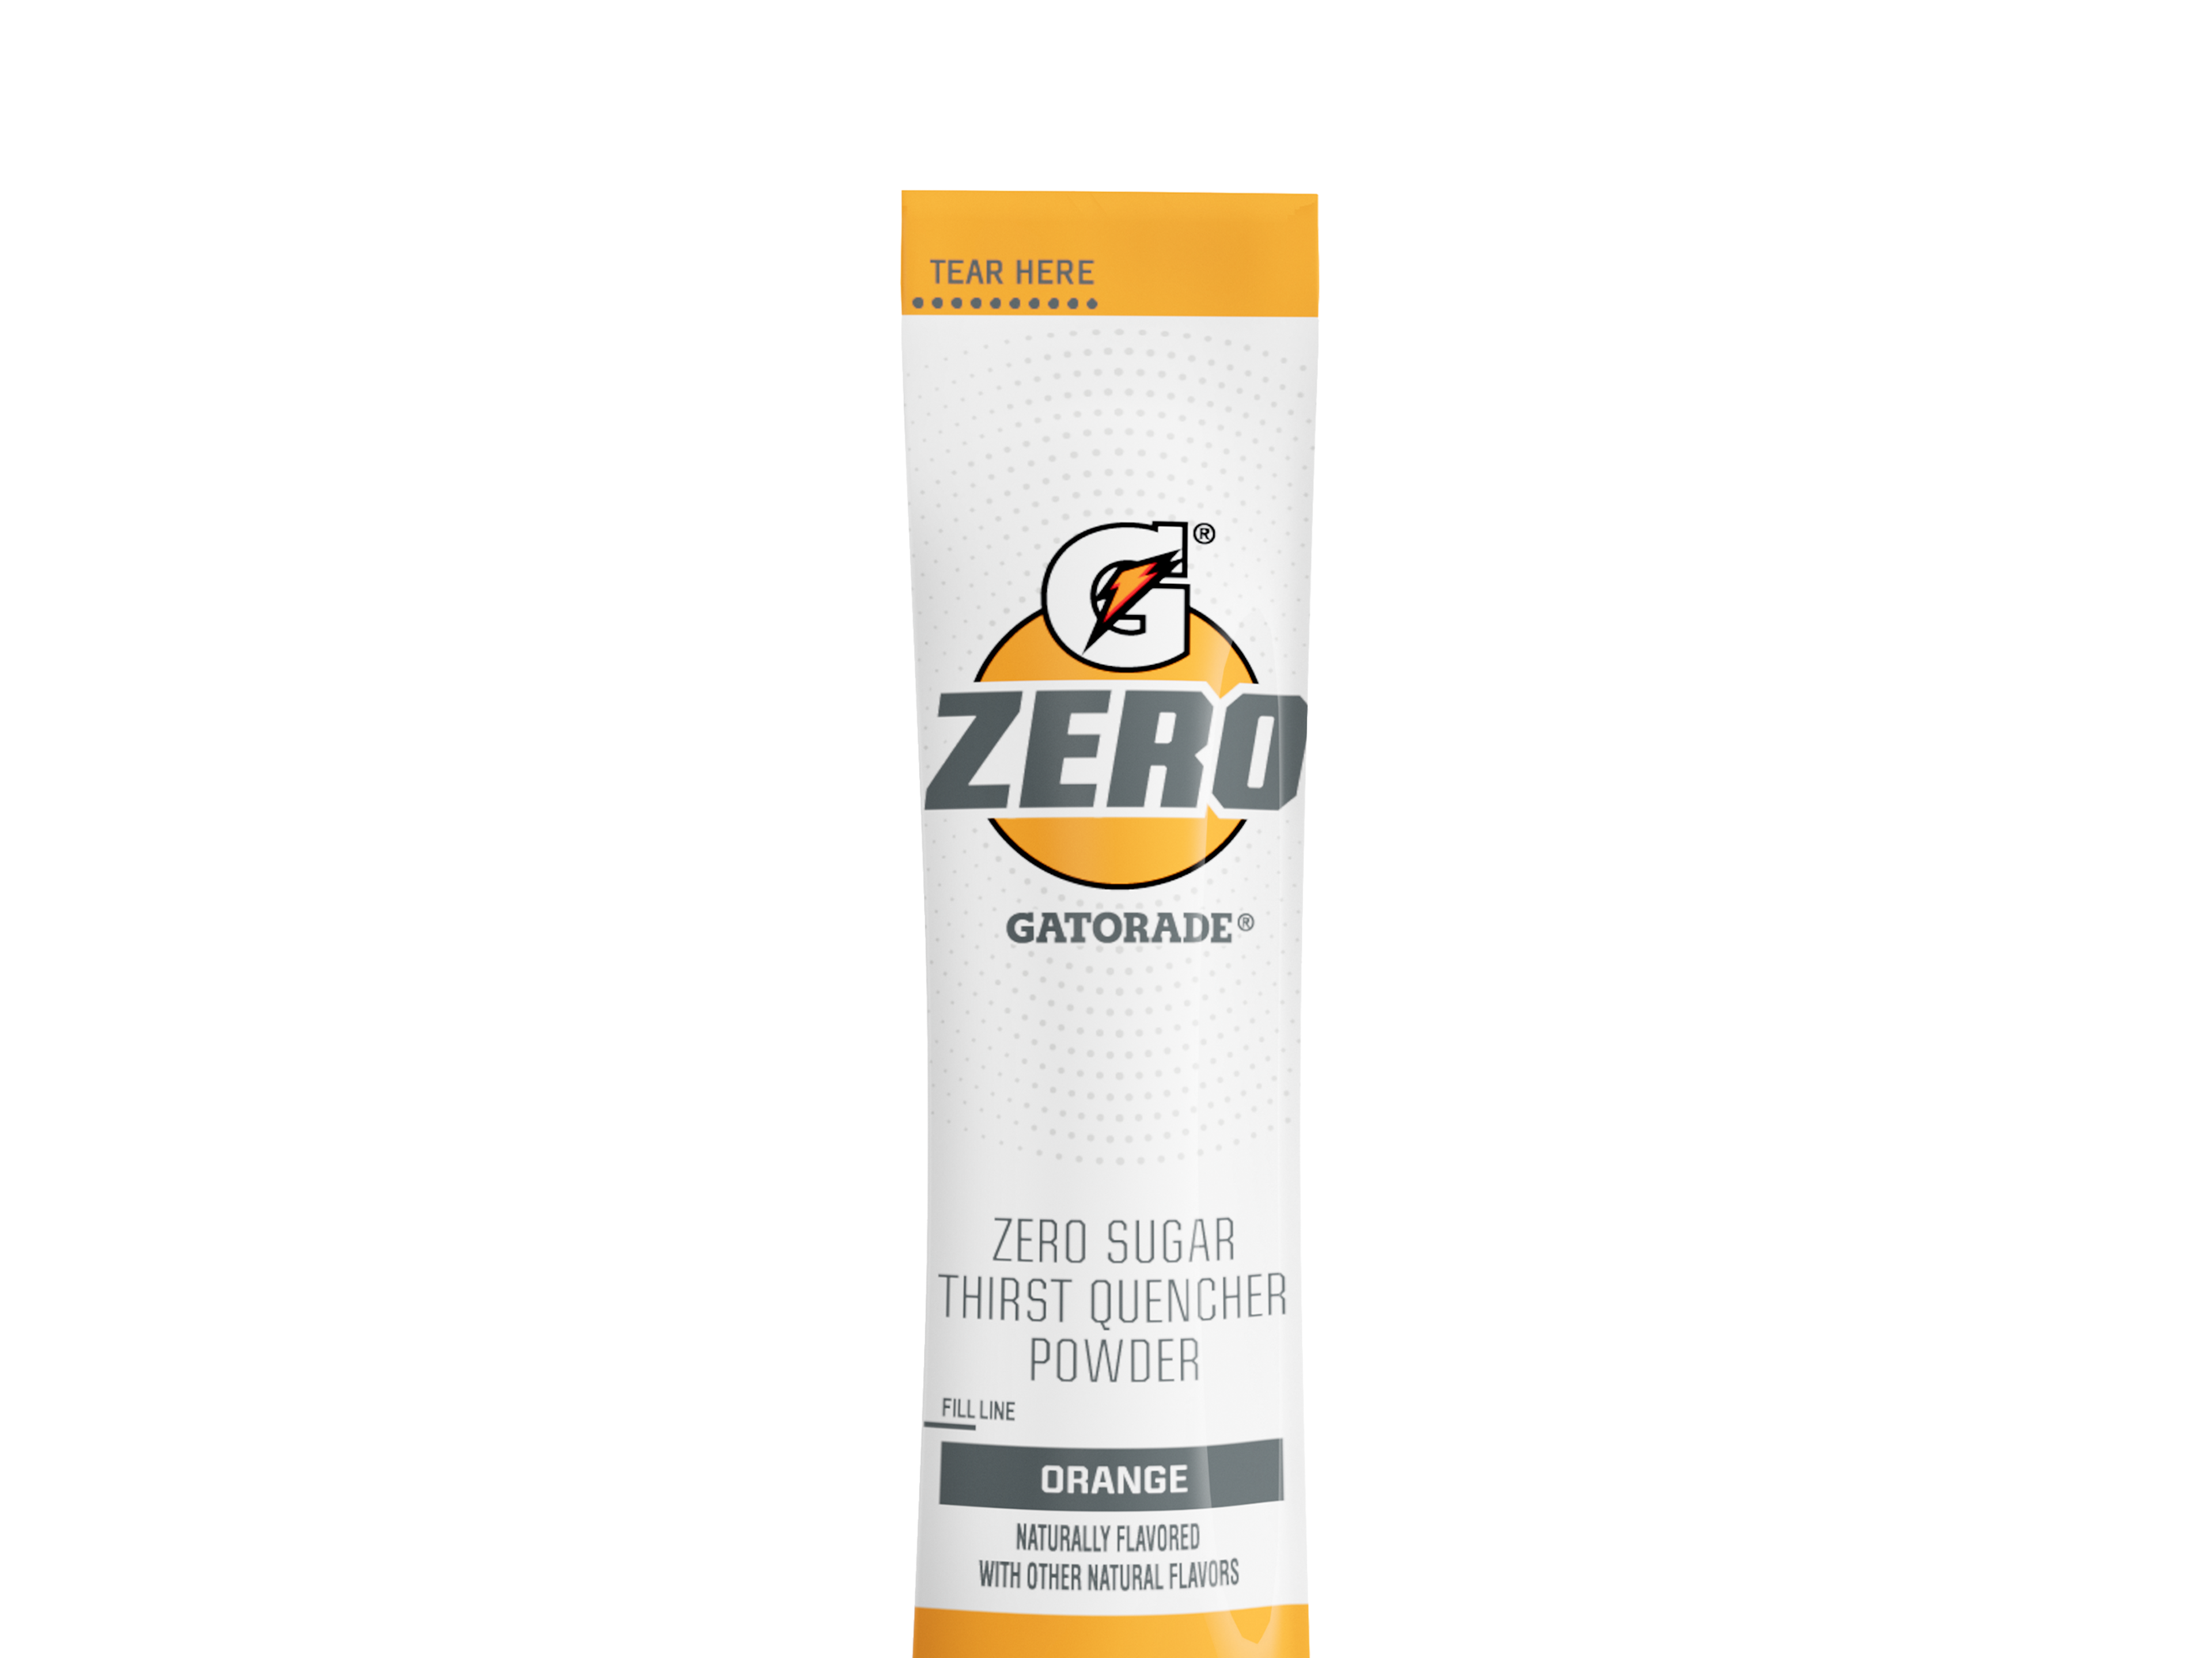 Gatorade zero orange single serve powder